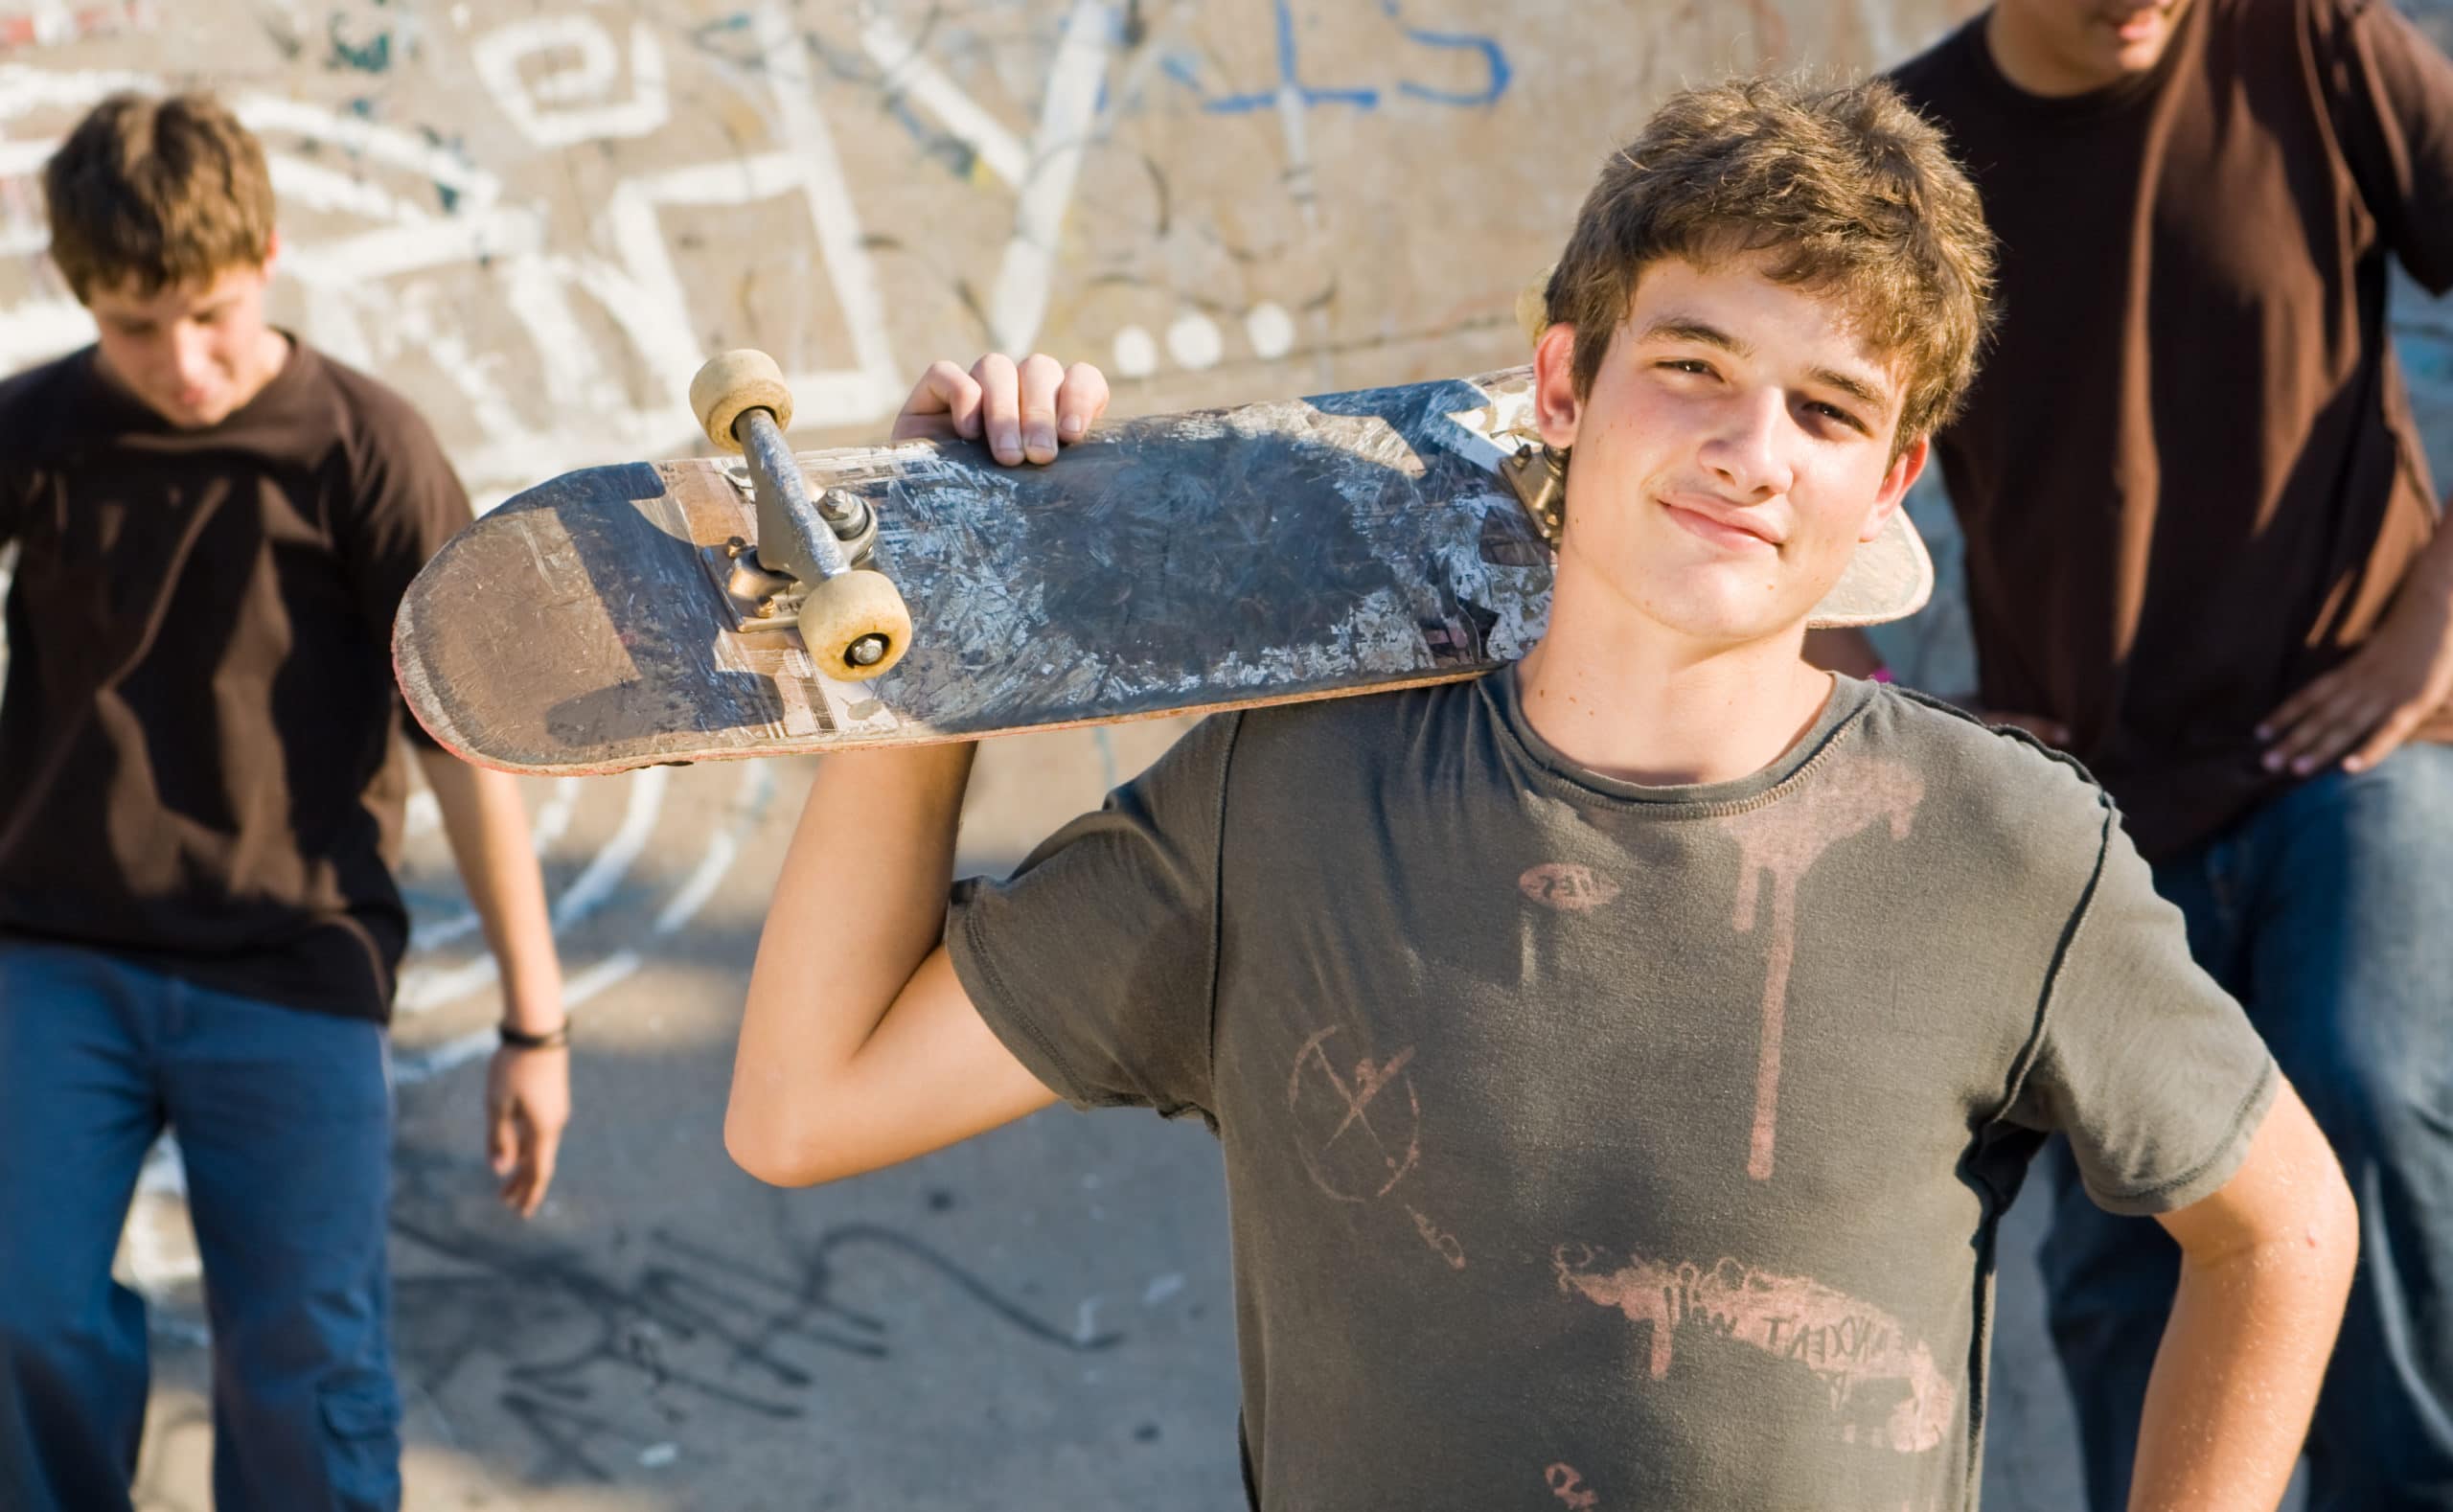 boy holding skateboard